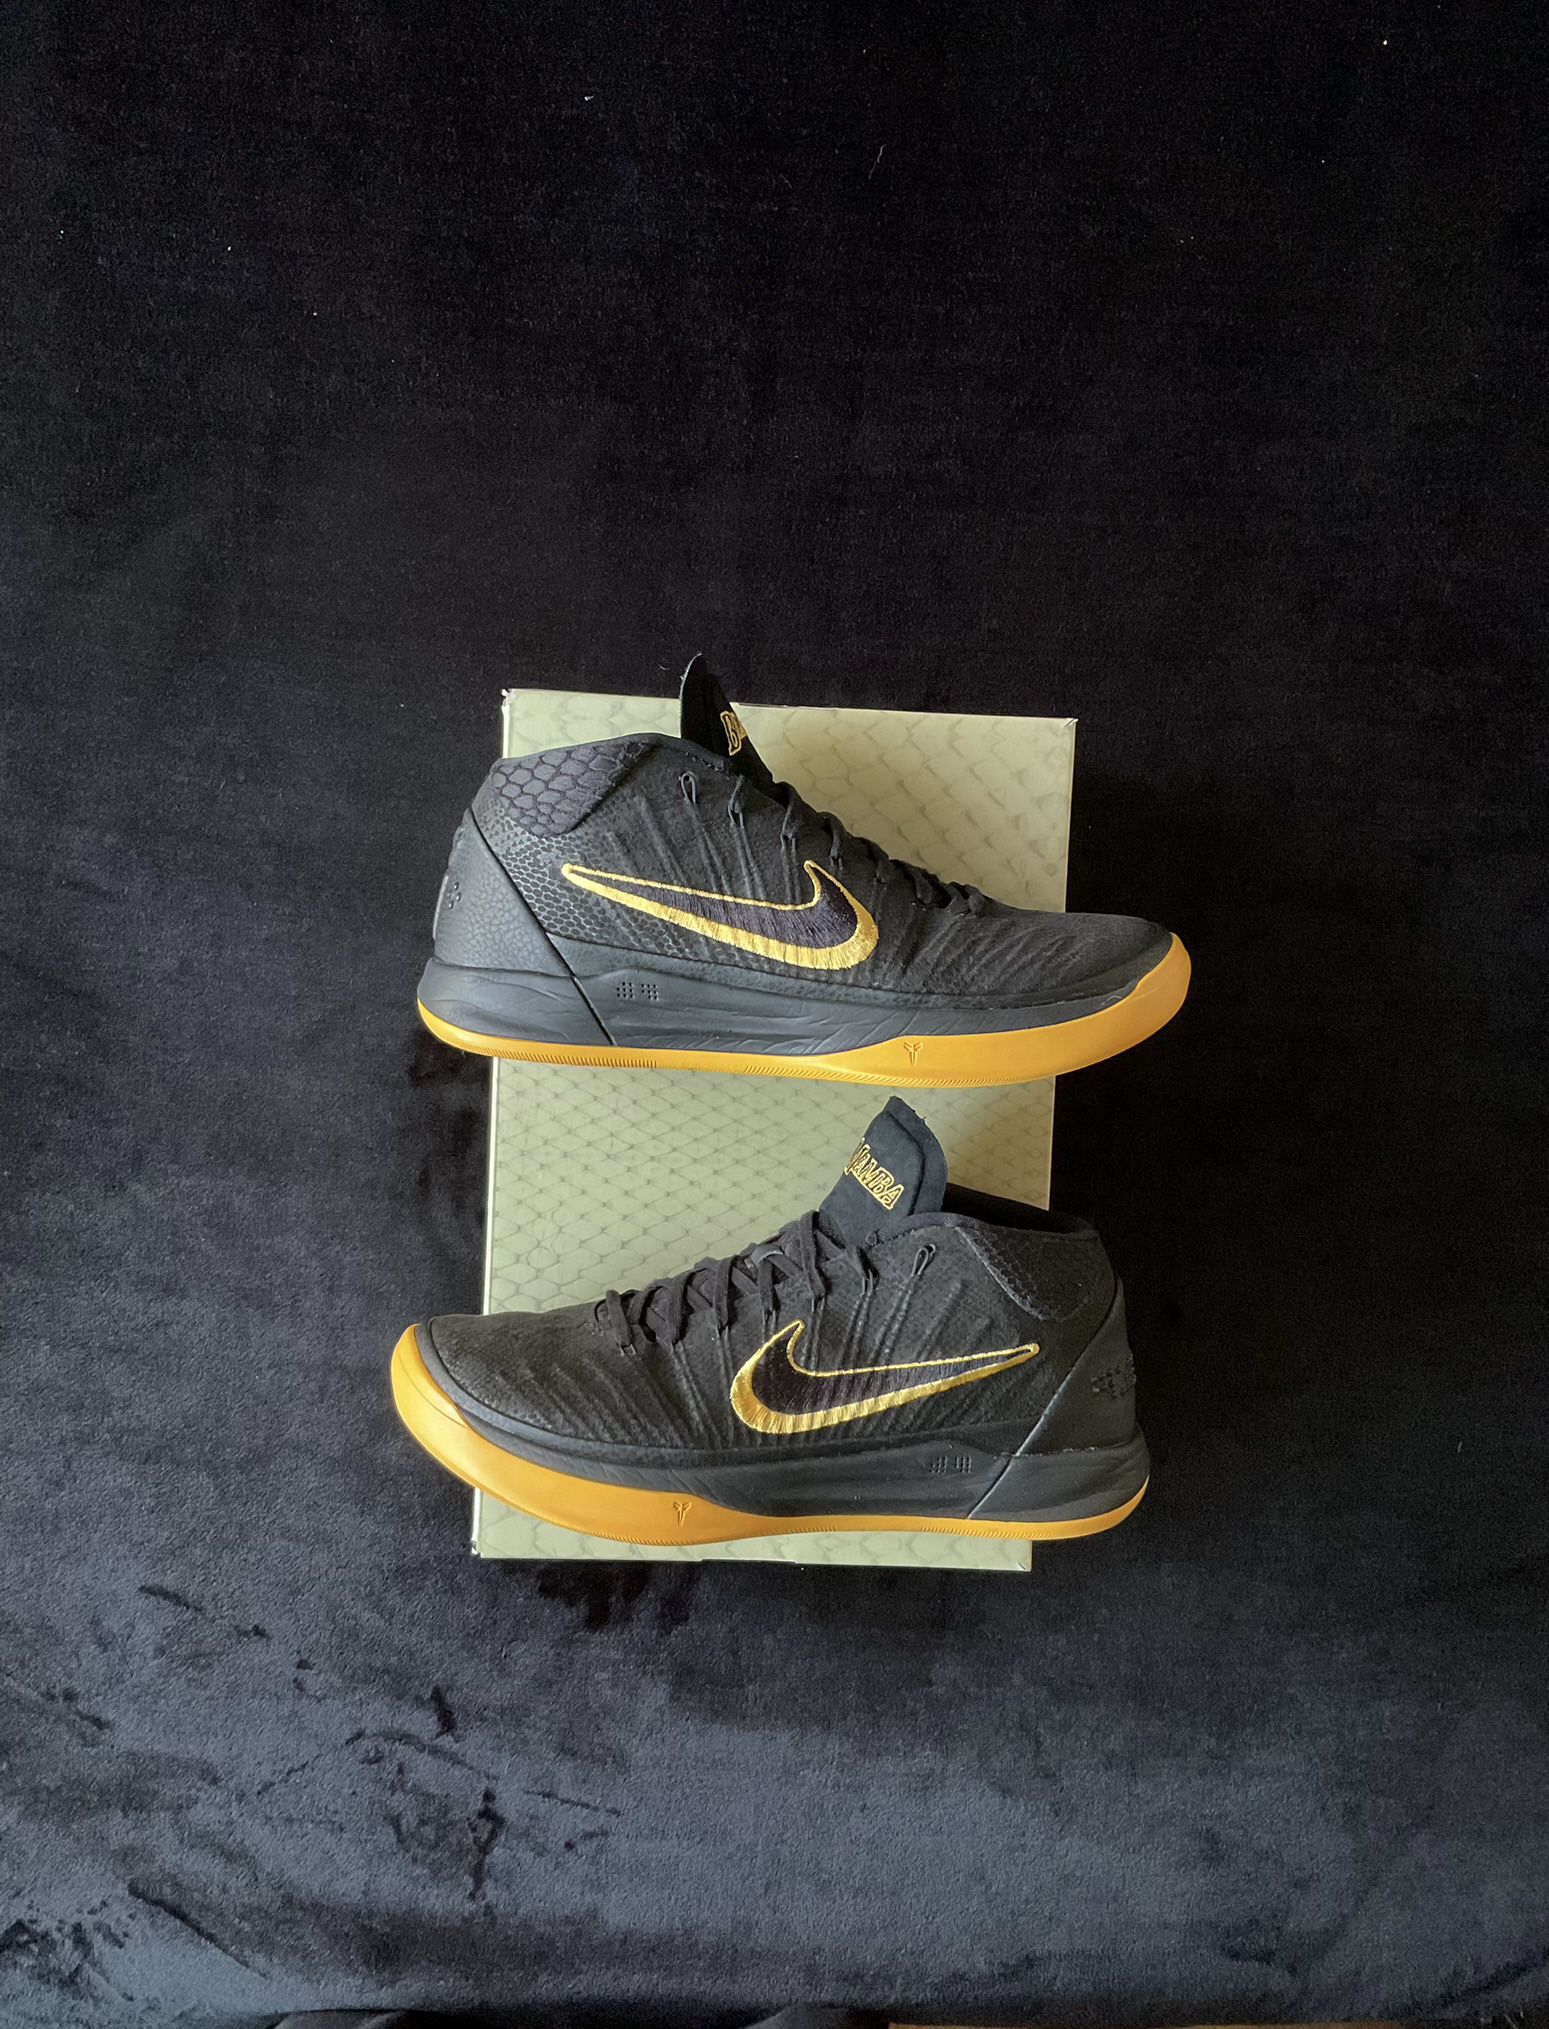 Men’s Nike Kobe AD Mid BM Size 9.5